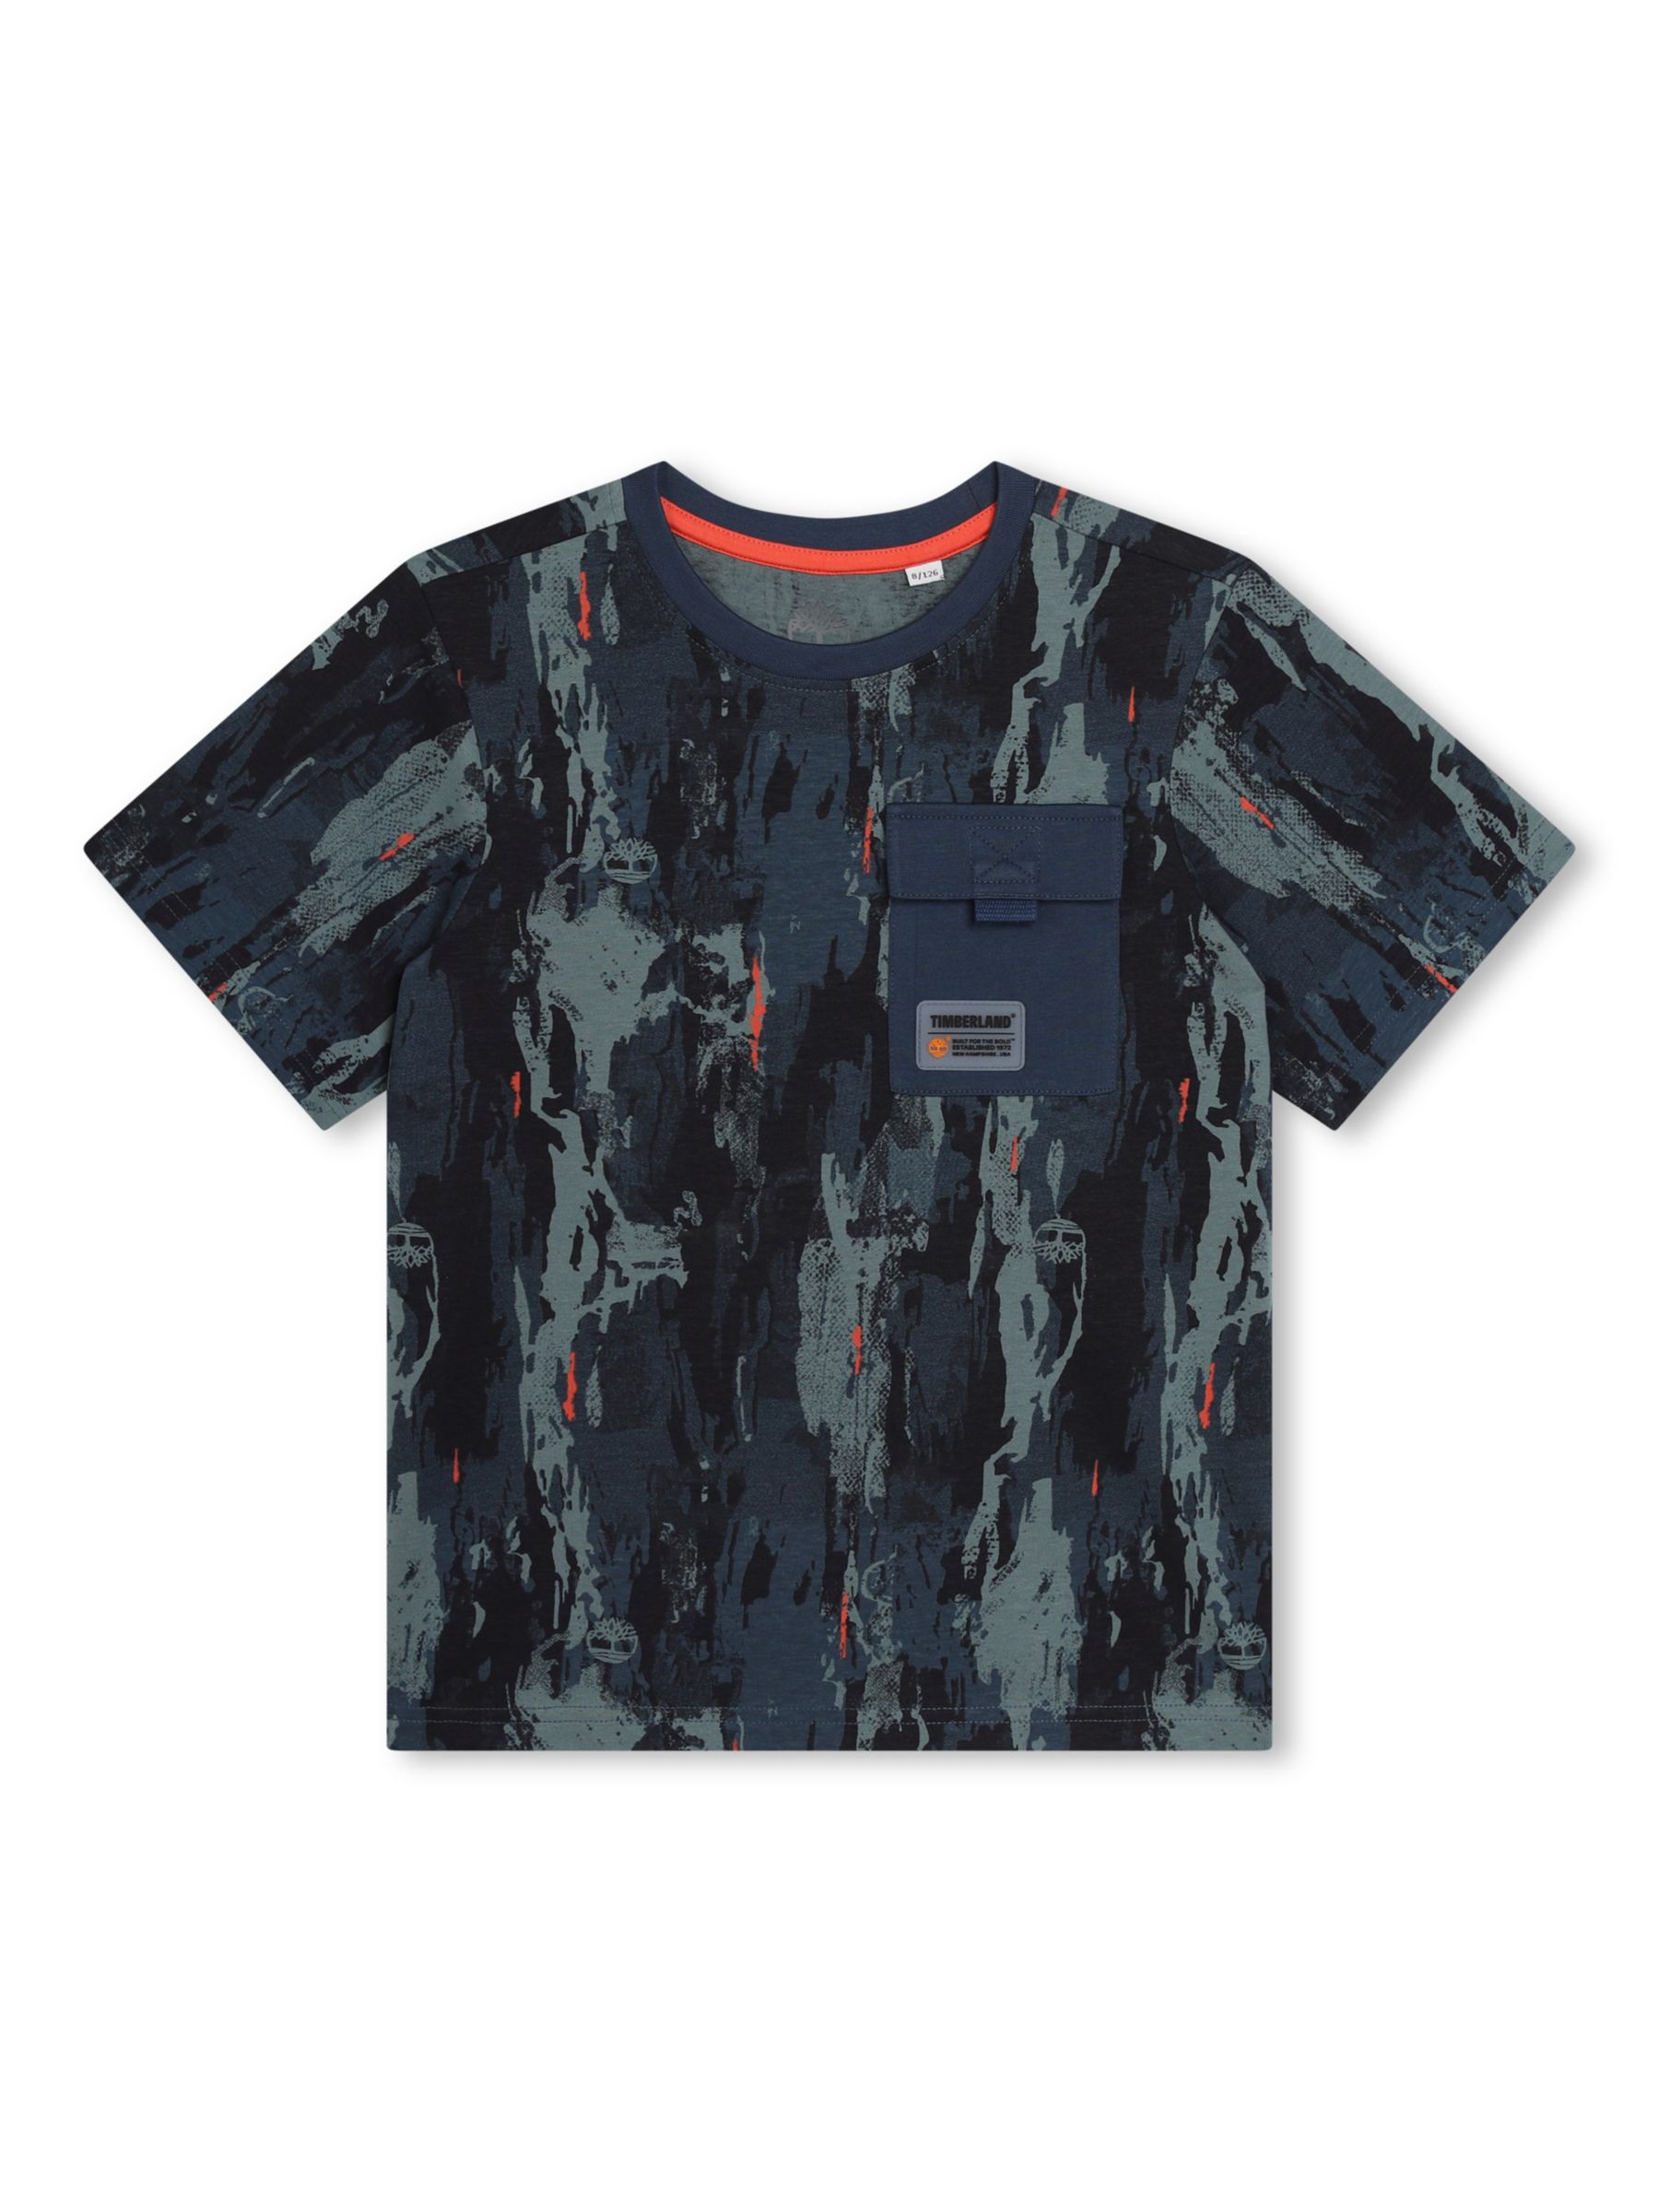 Timberland Kids' Fancy Logo Abstract Print T-Shirt, Blue/Multi, 4 years